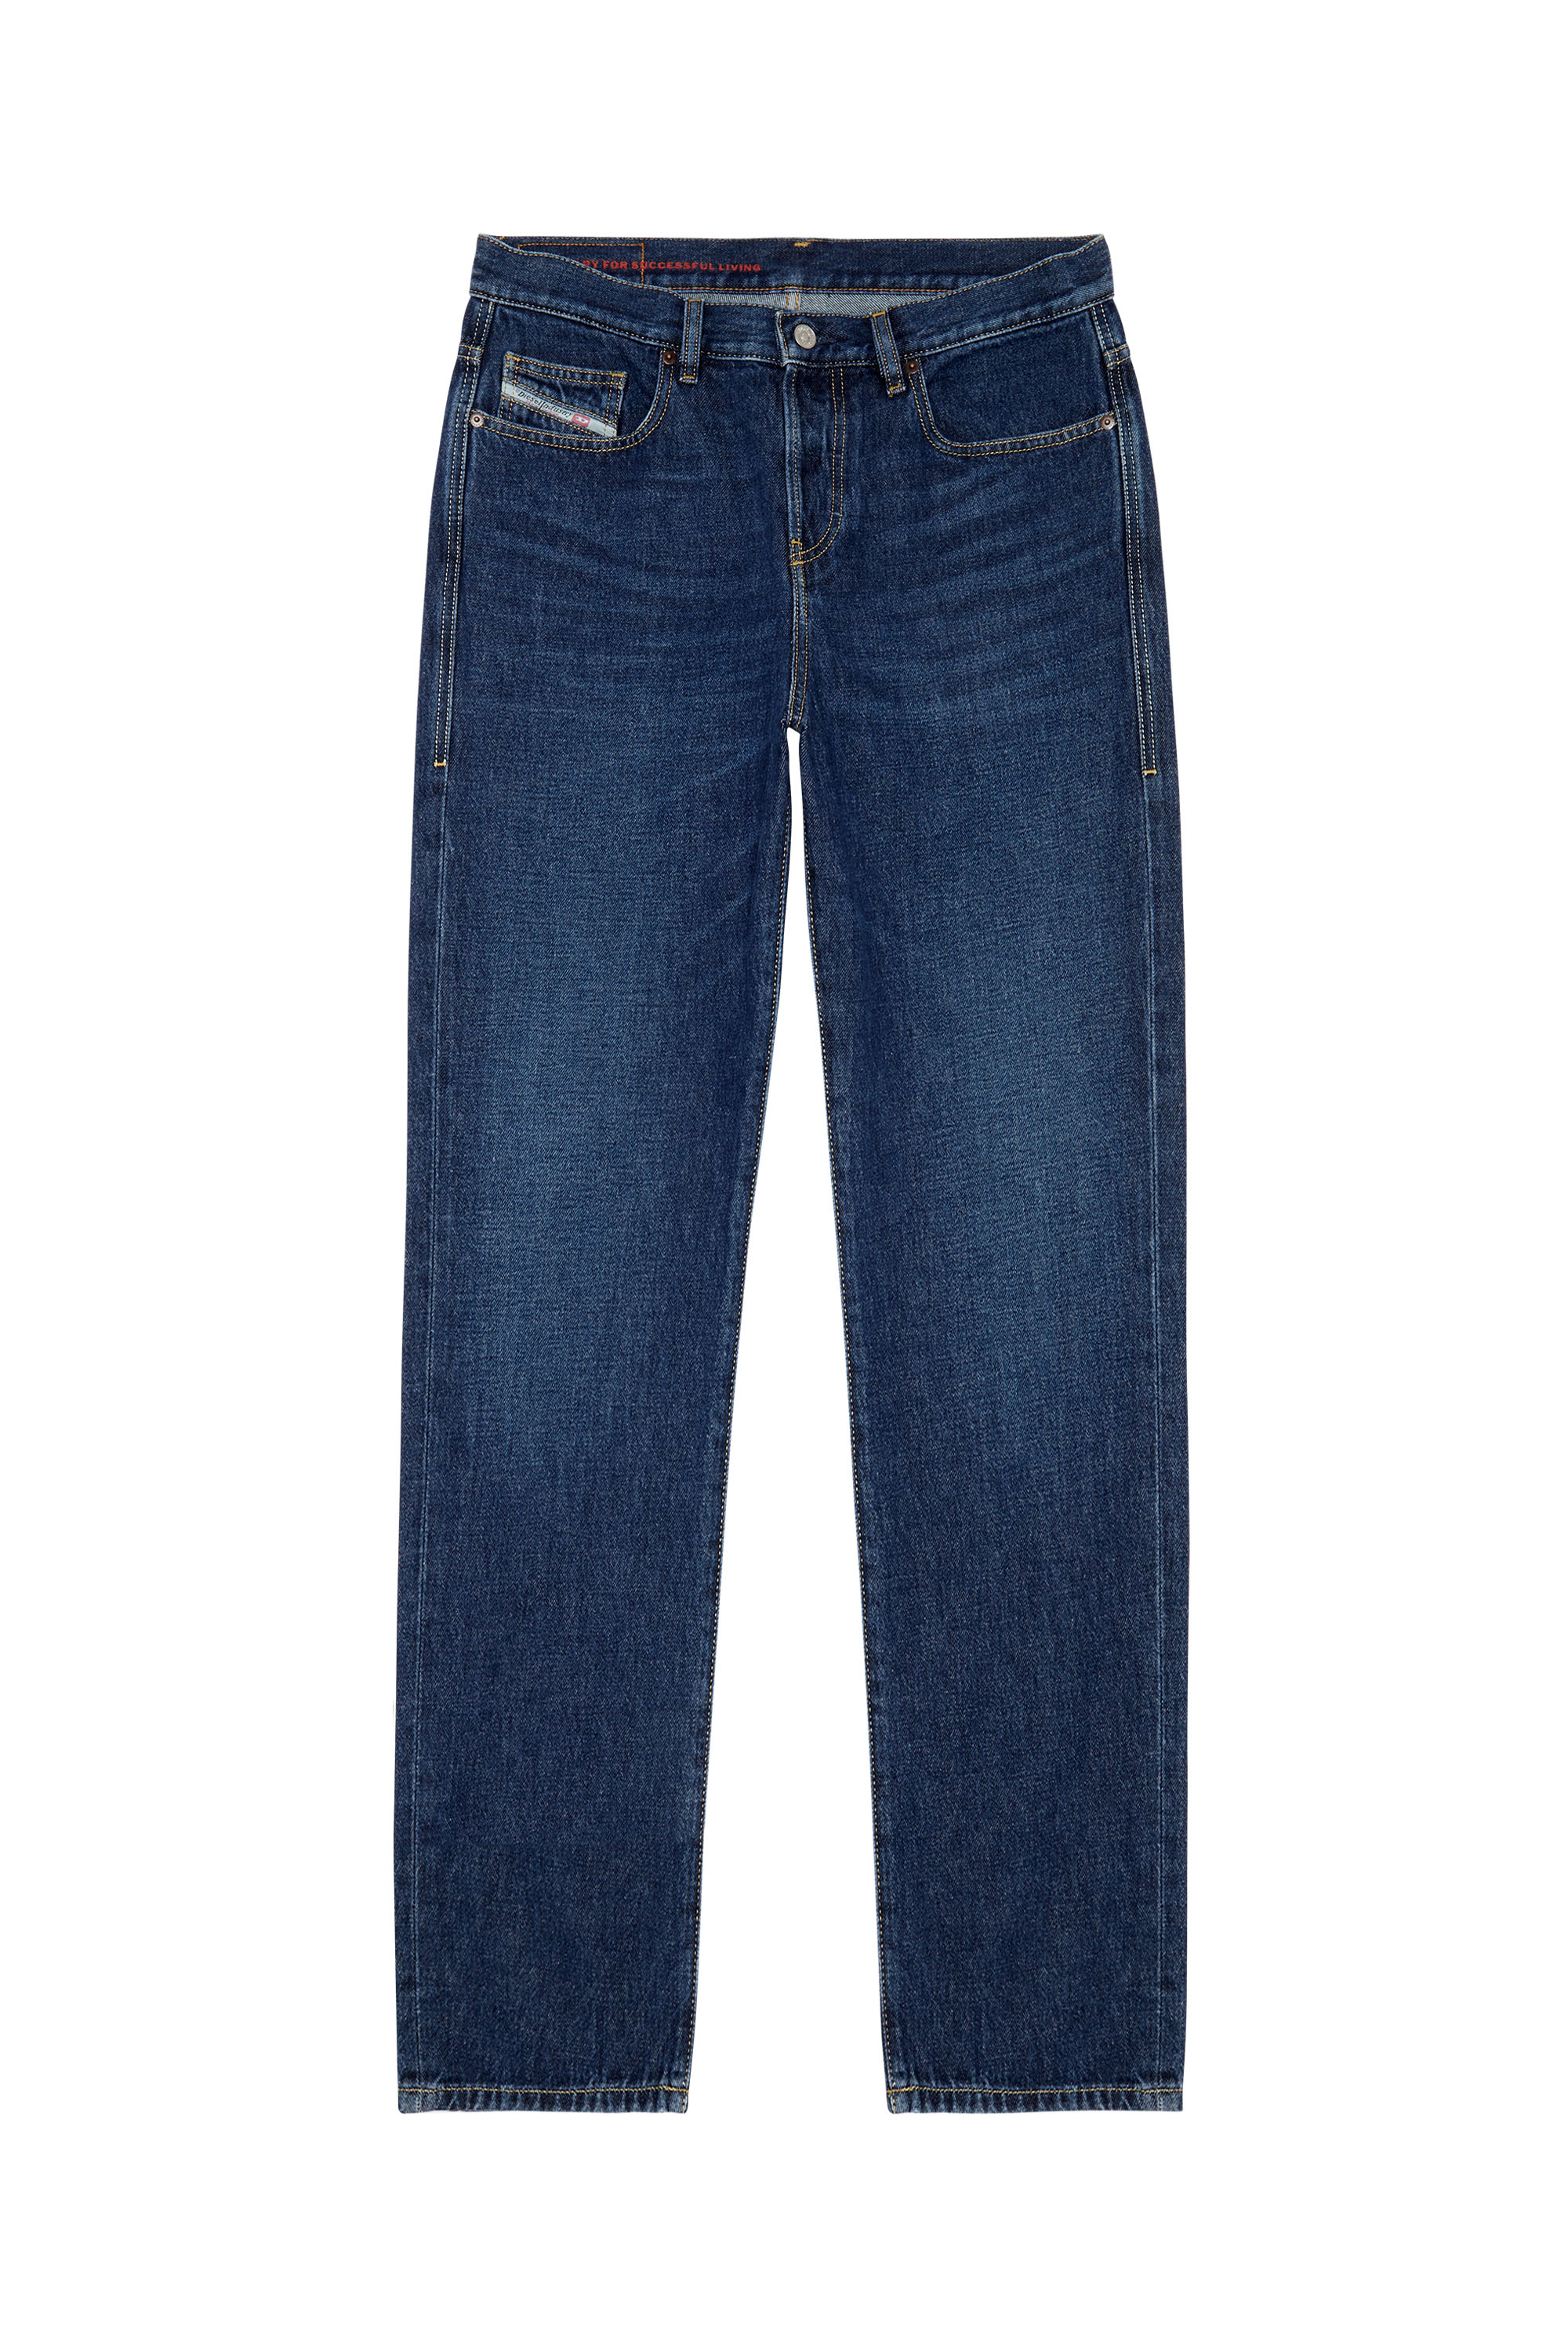 2020 D-VIKER 09C03 Straight Jeans, Blu Scuro - Jeans